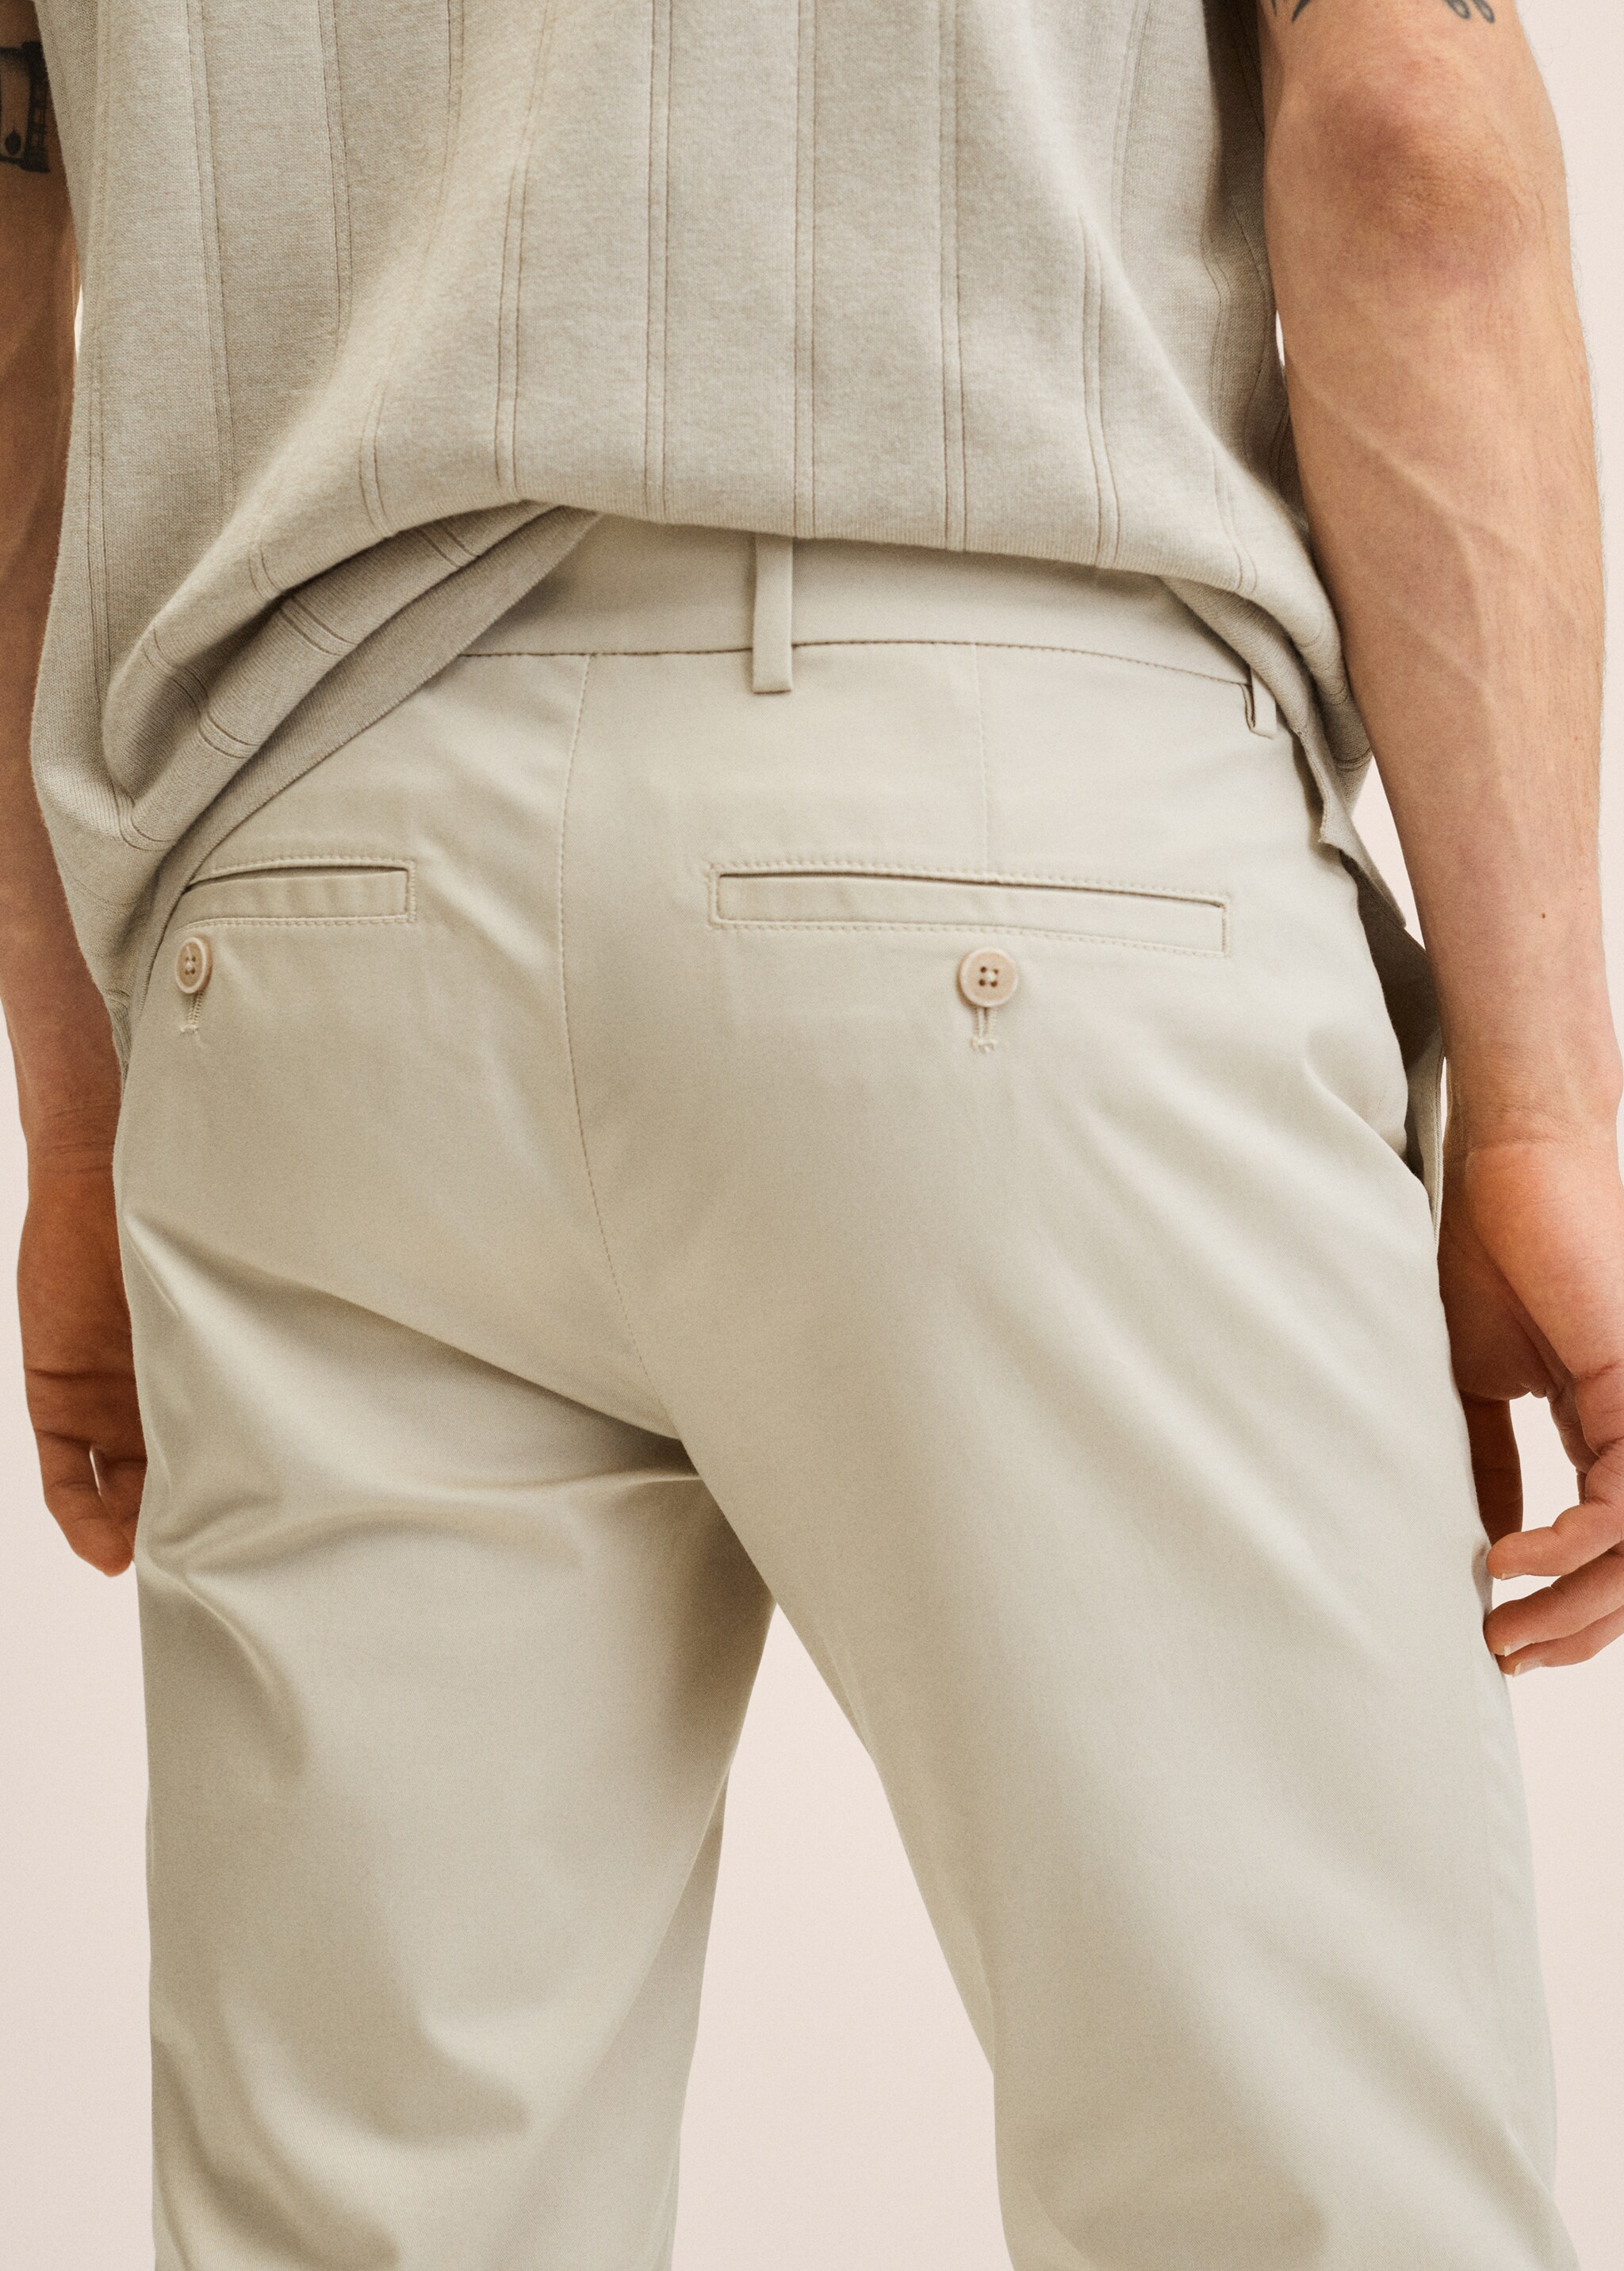 Pantalons xinesos skinny - Detall de l'article 3